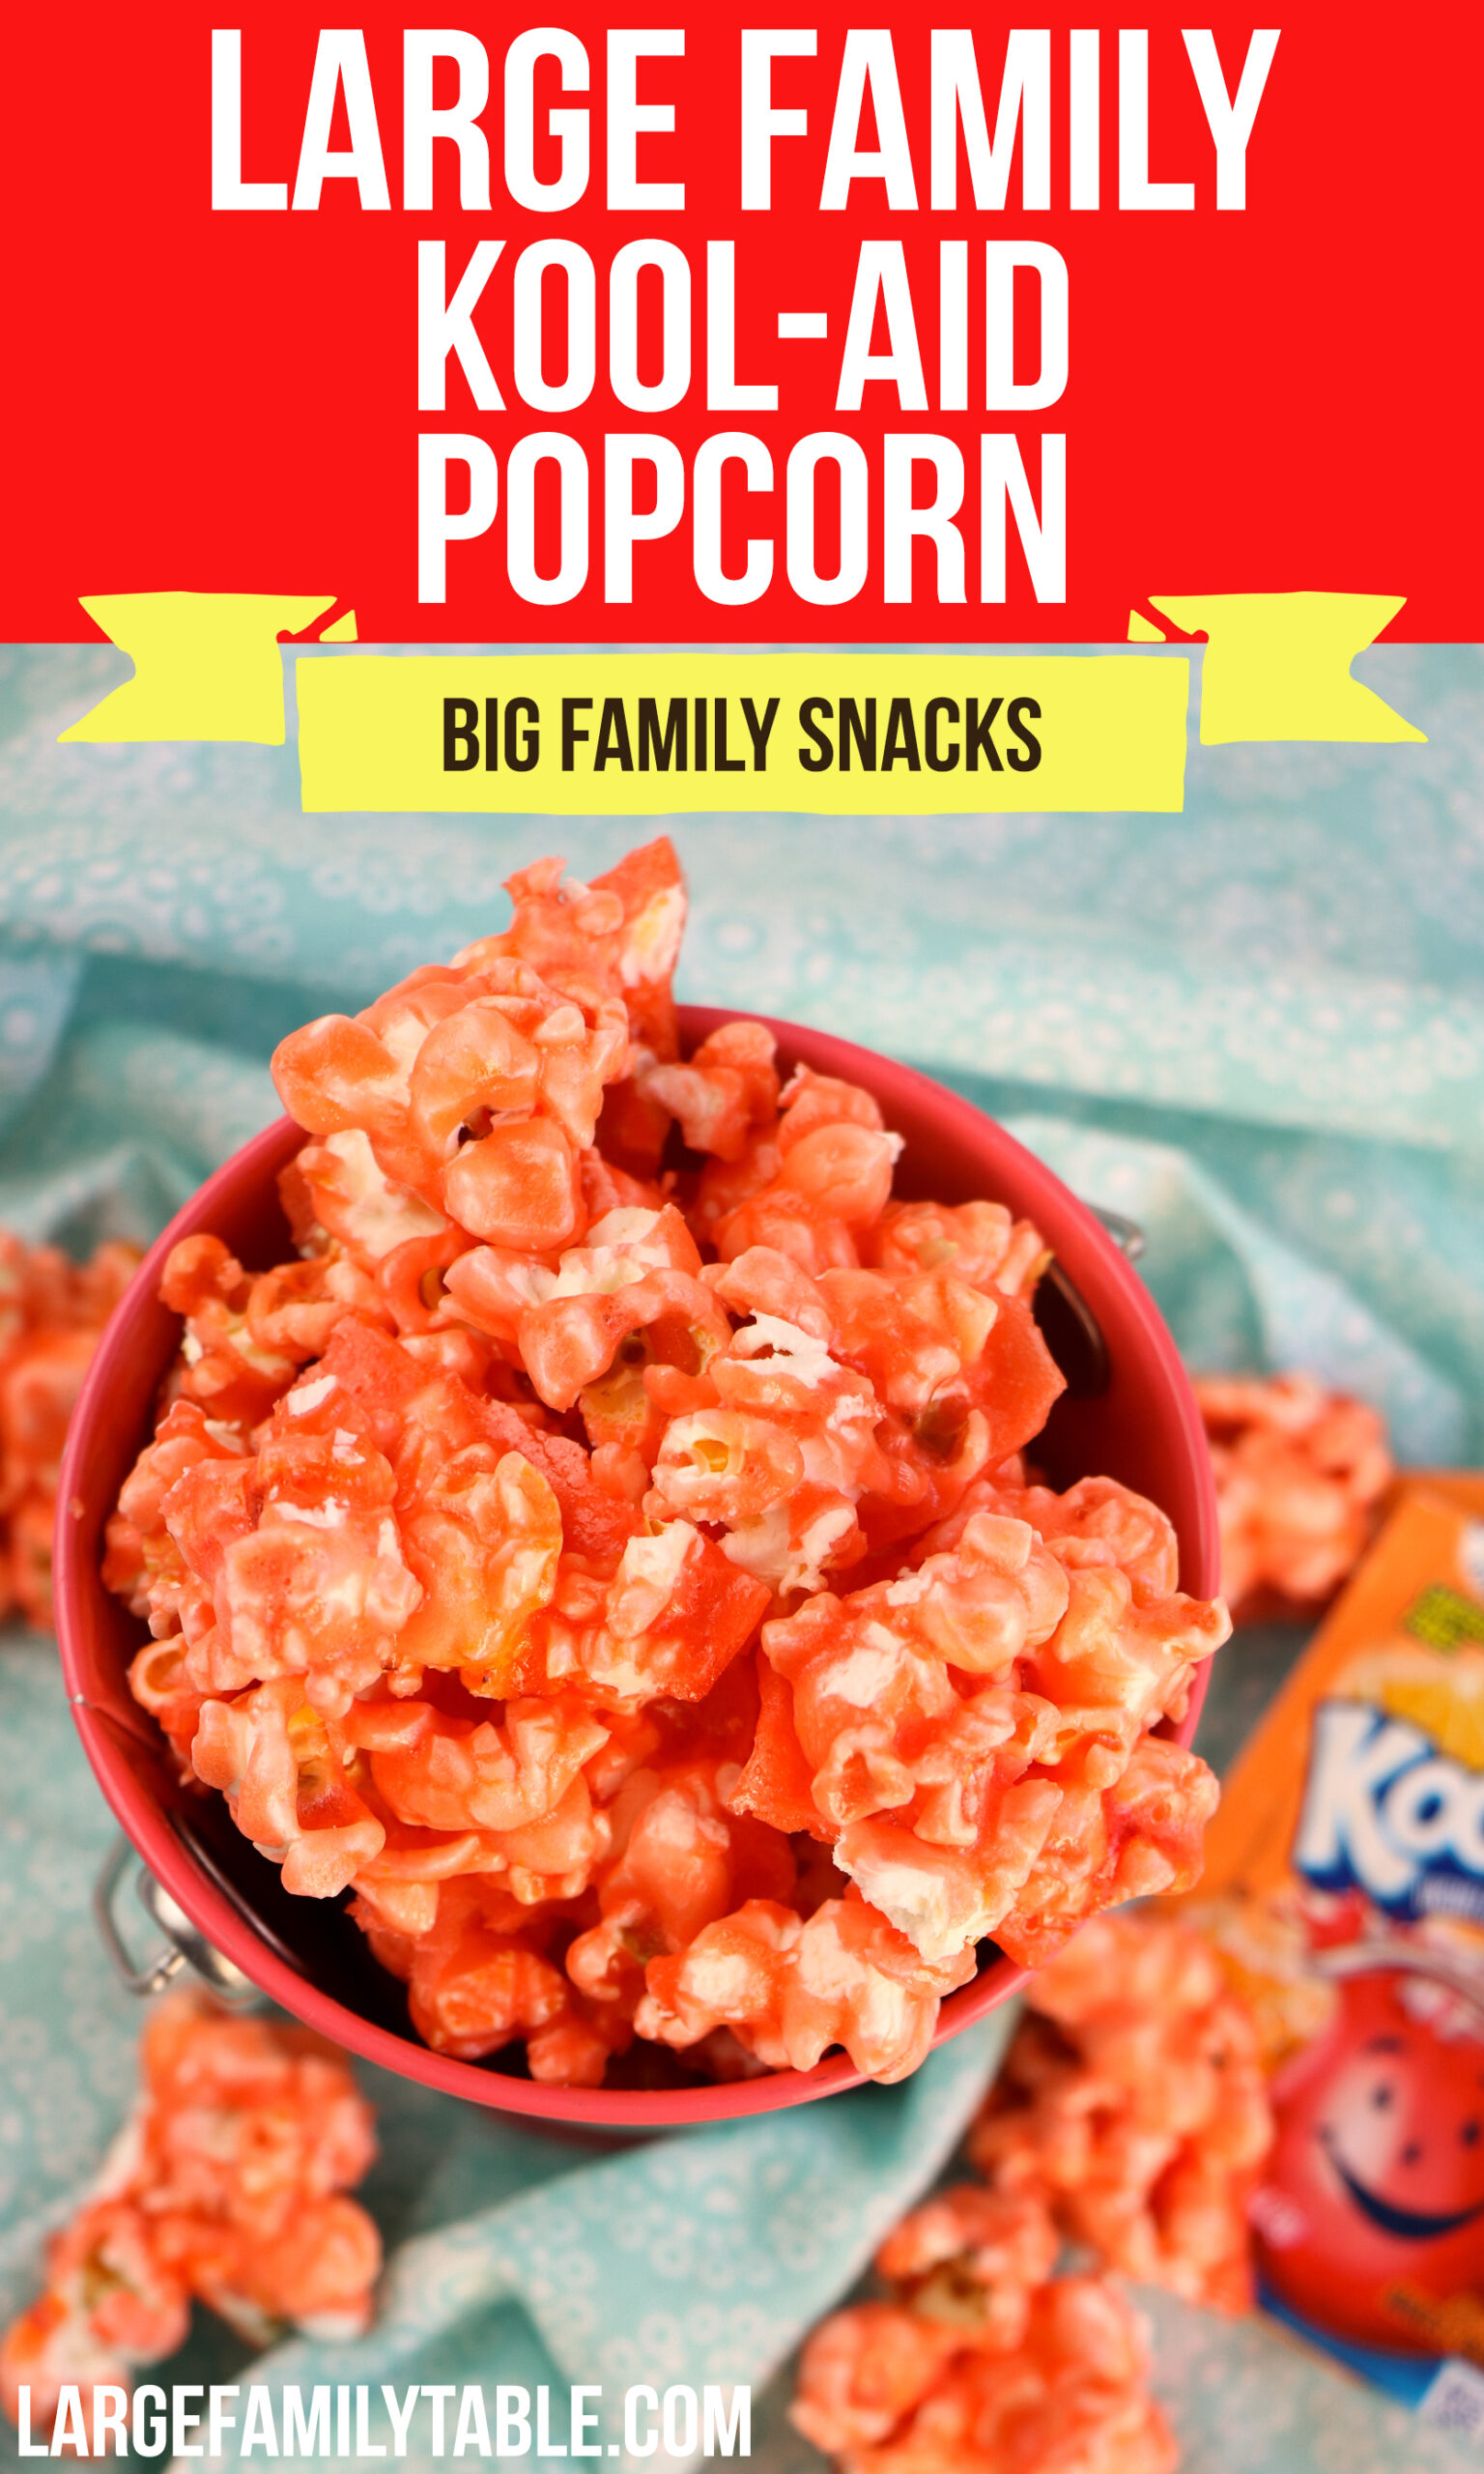 Big Family Kool-Aid Popcorn